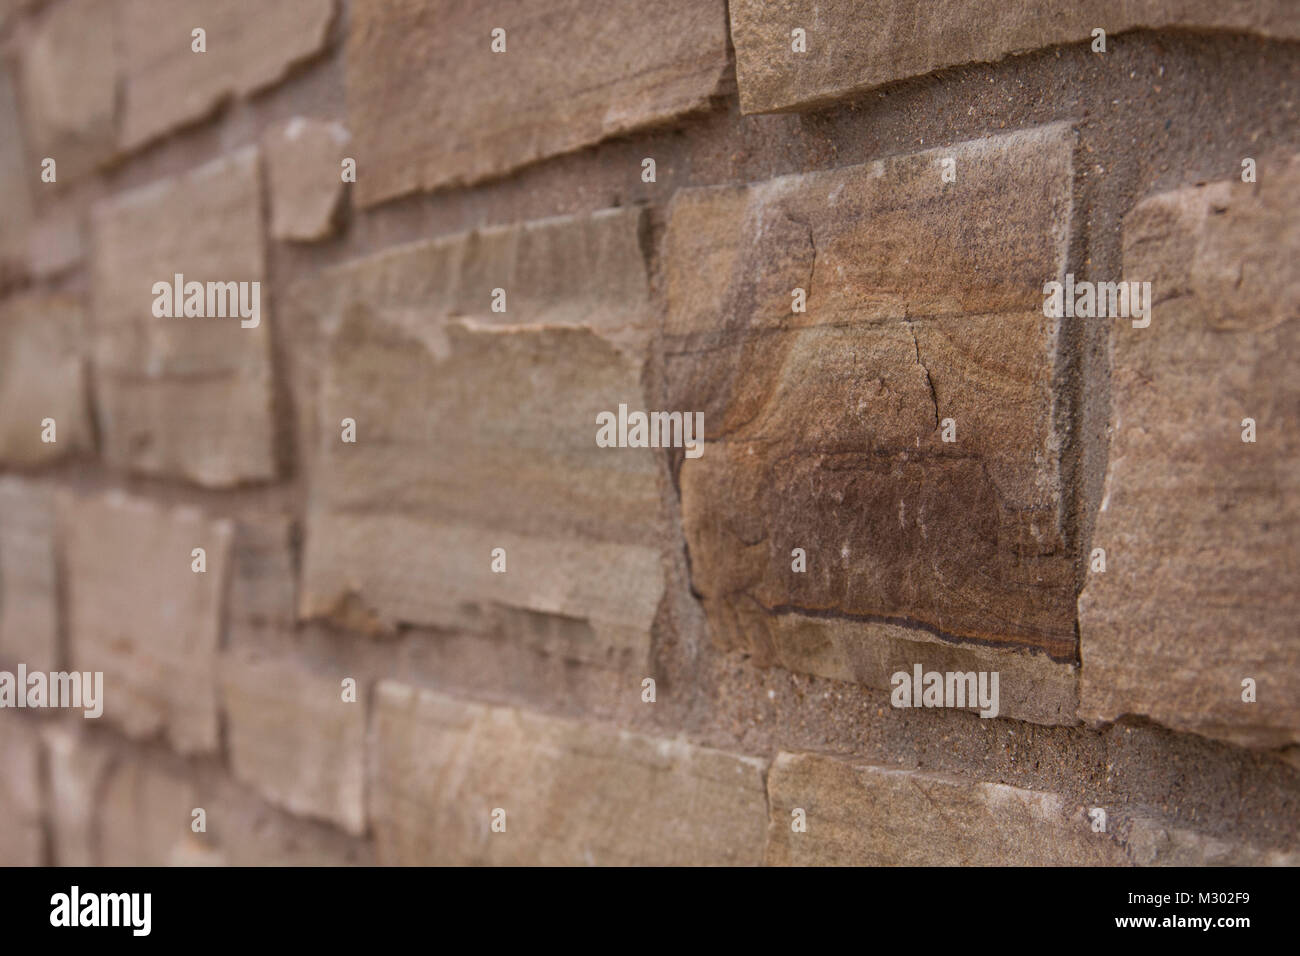 La vista exterior de un muro exterior de ladrillo de piedra arenisca. Foto de stock